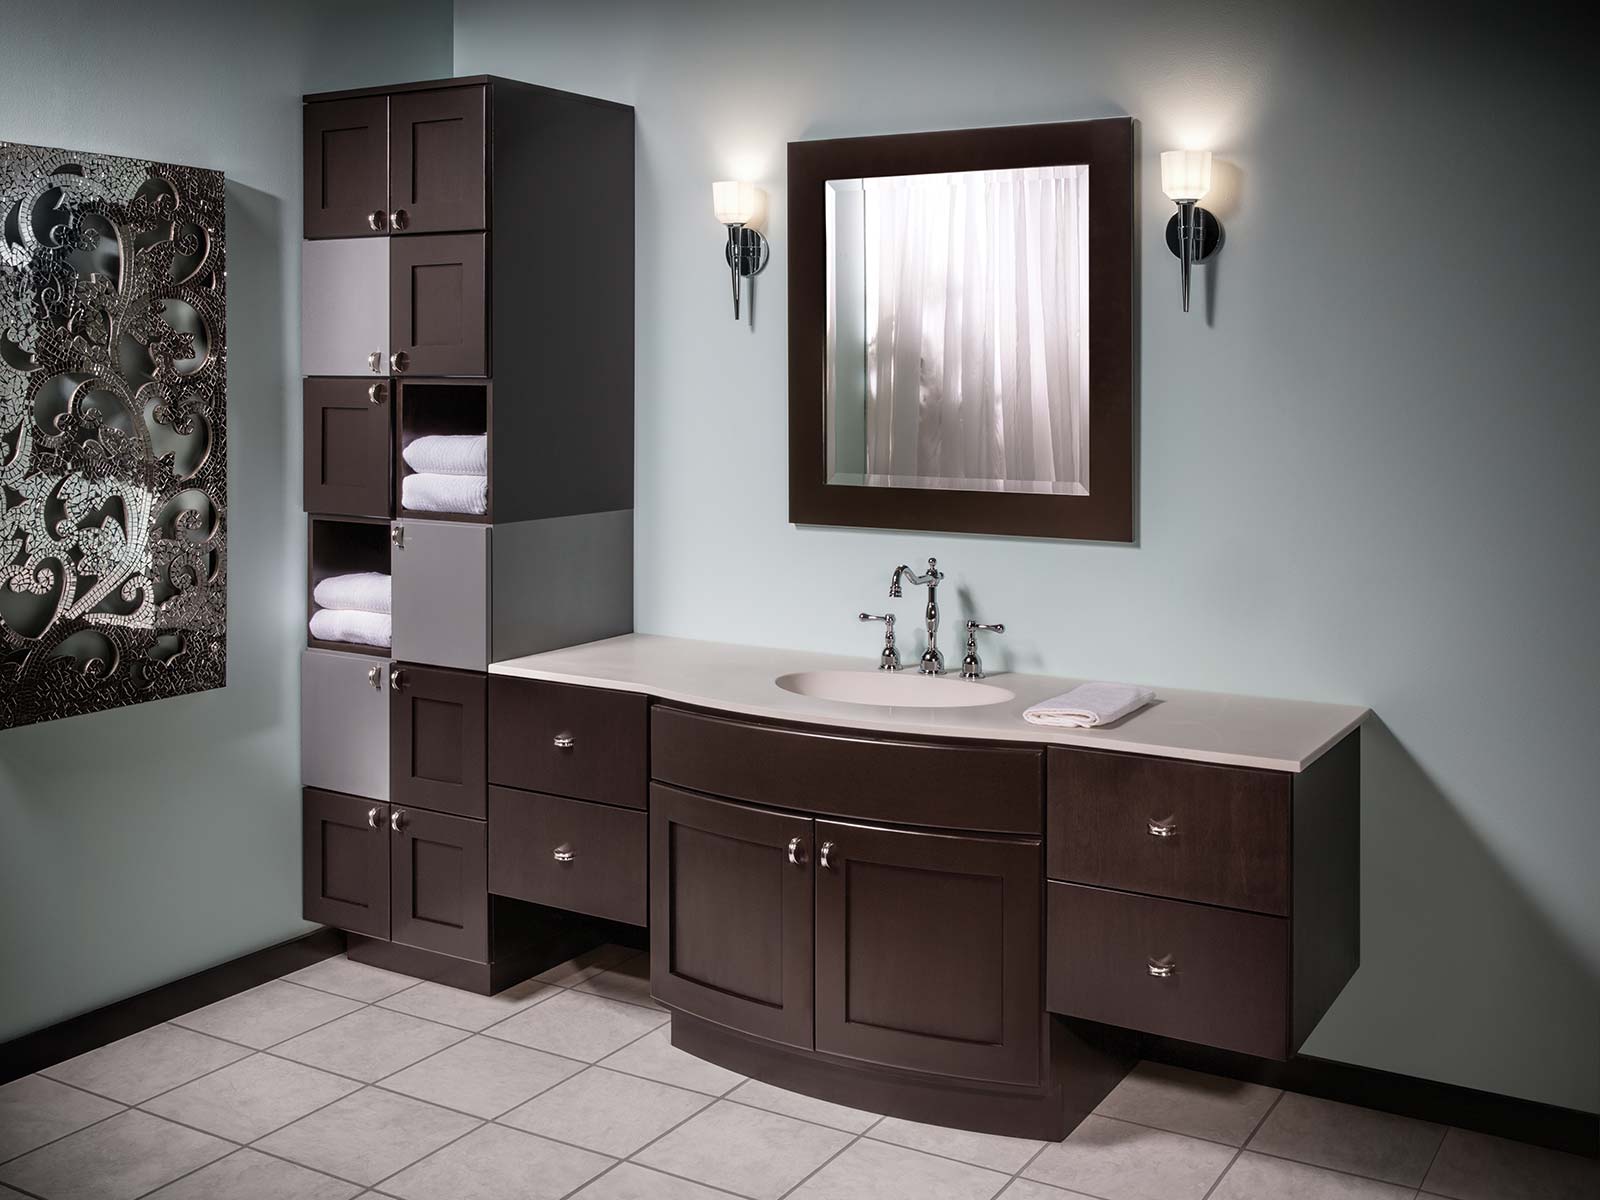 Insignia Bathroom Vanity Review